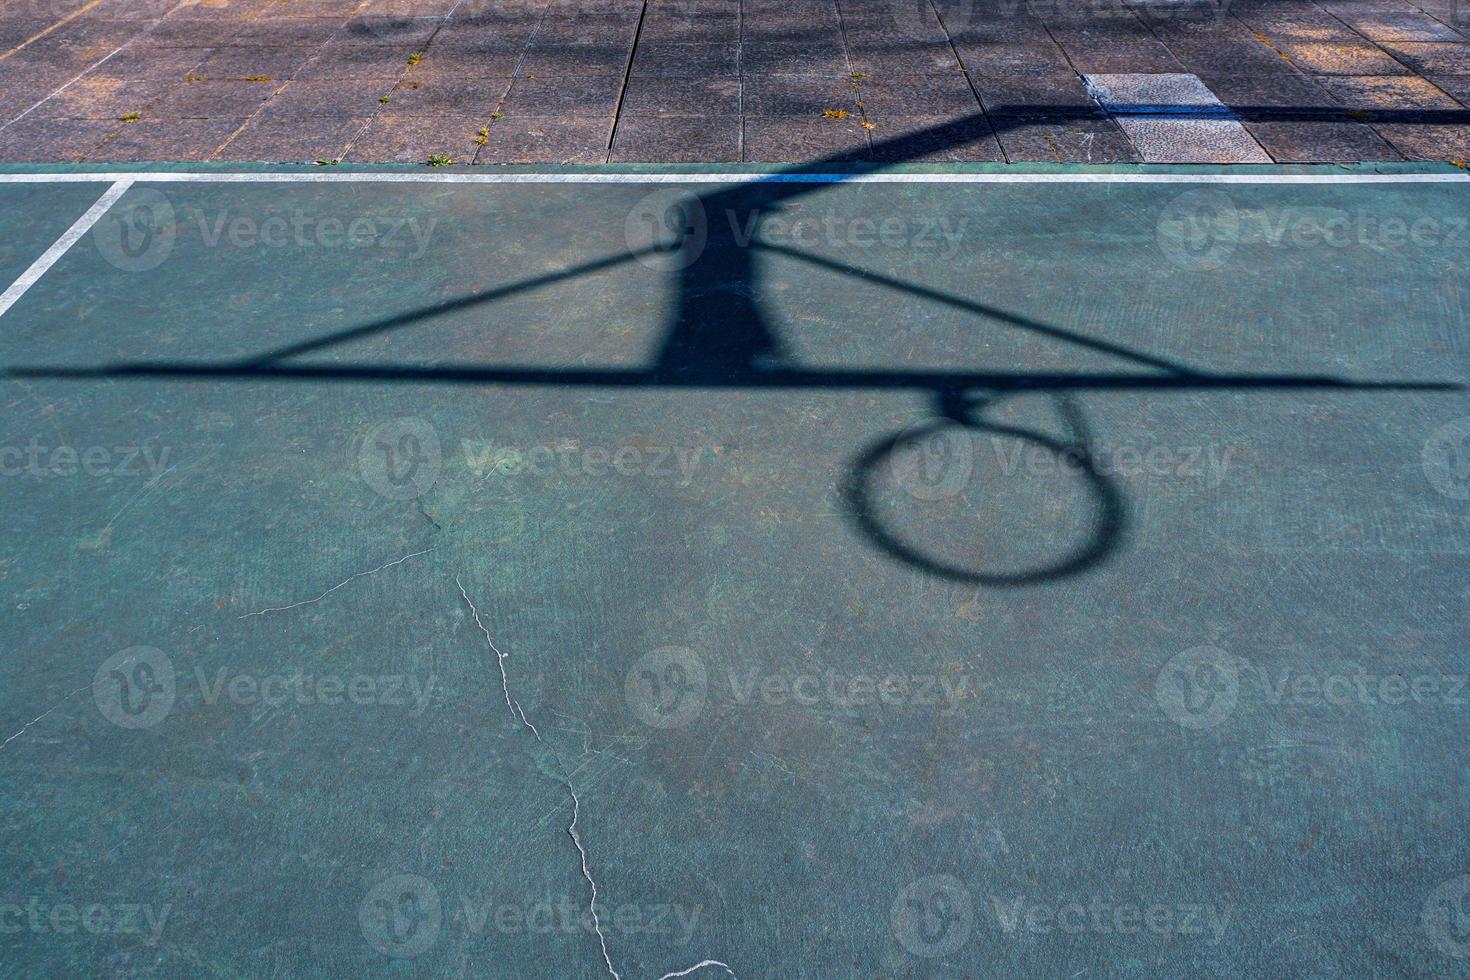 street basketball hoop shadows on the court photo